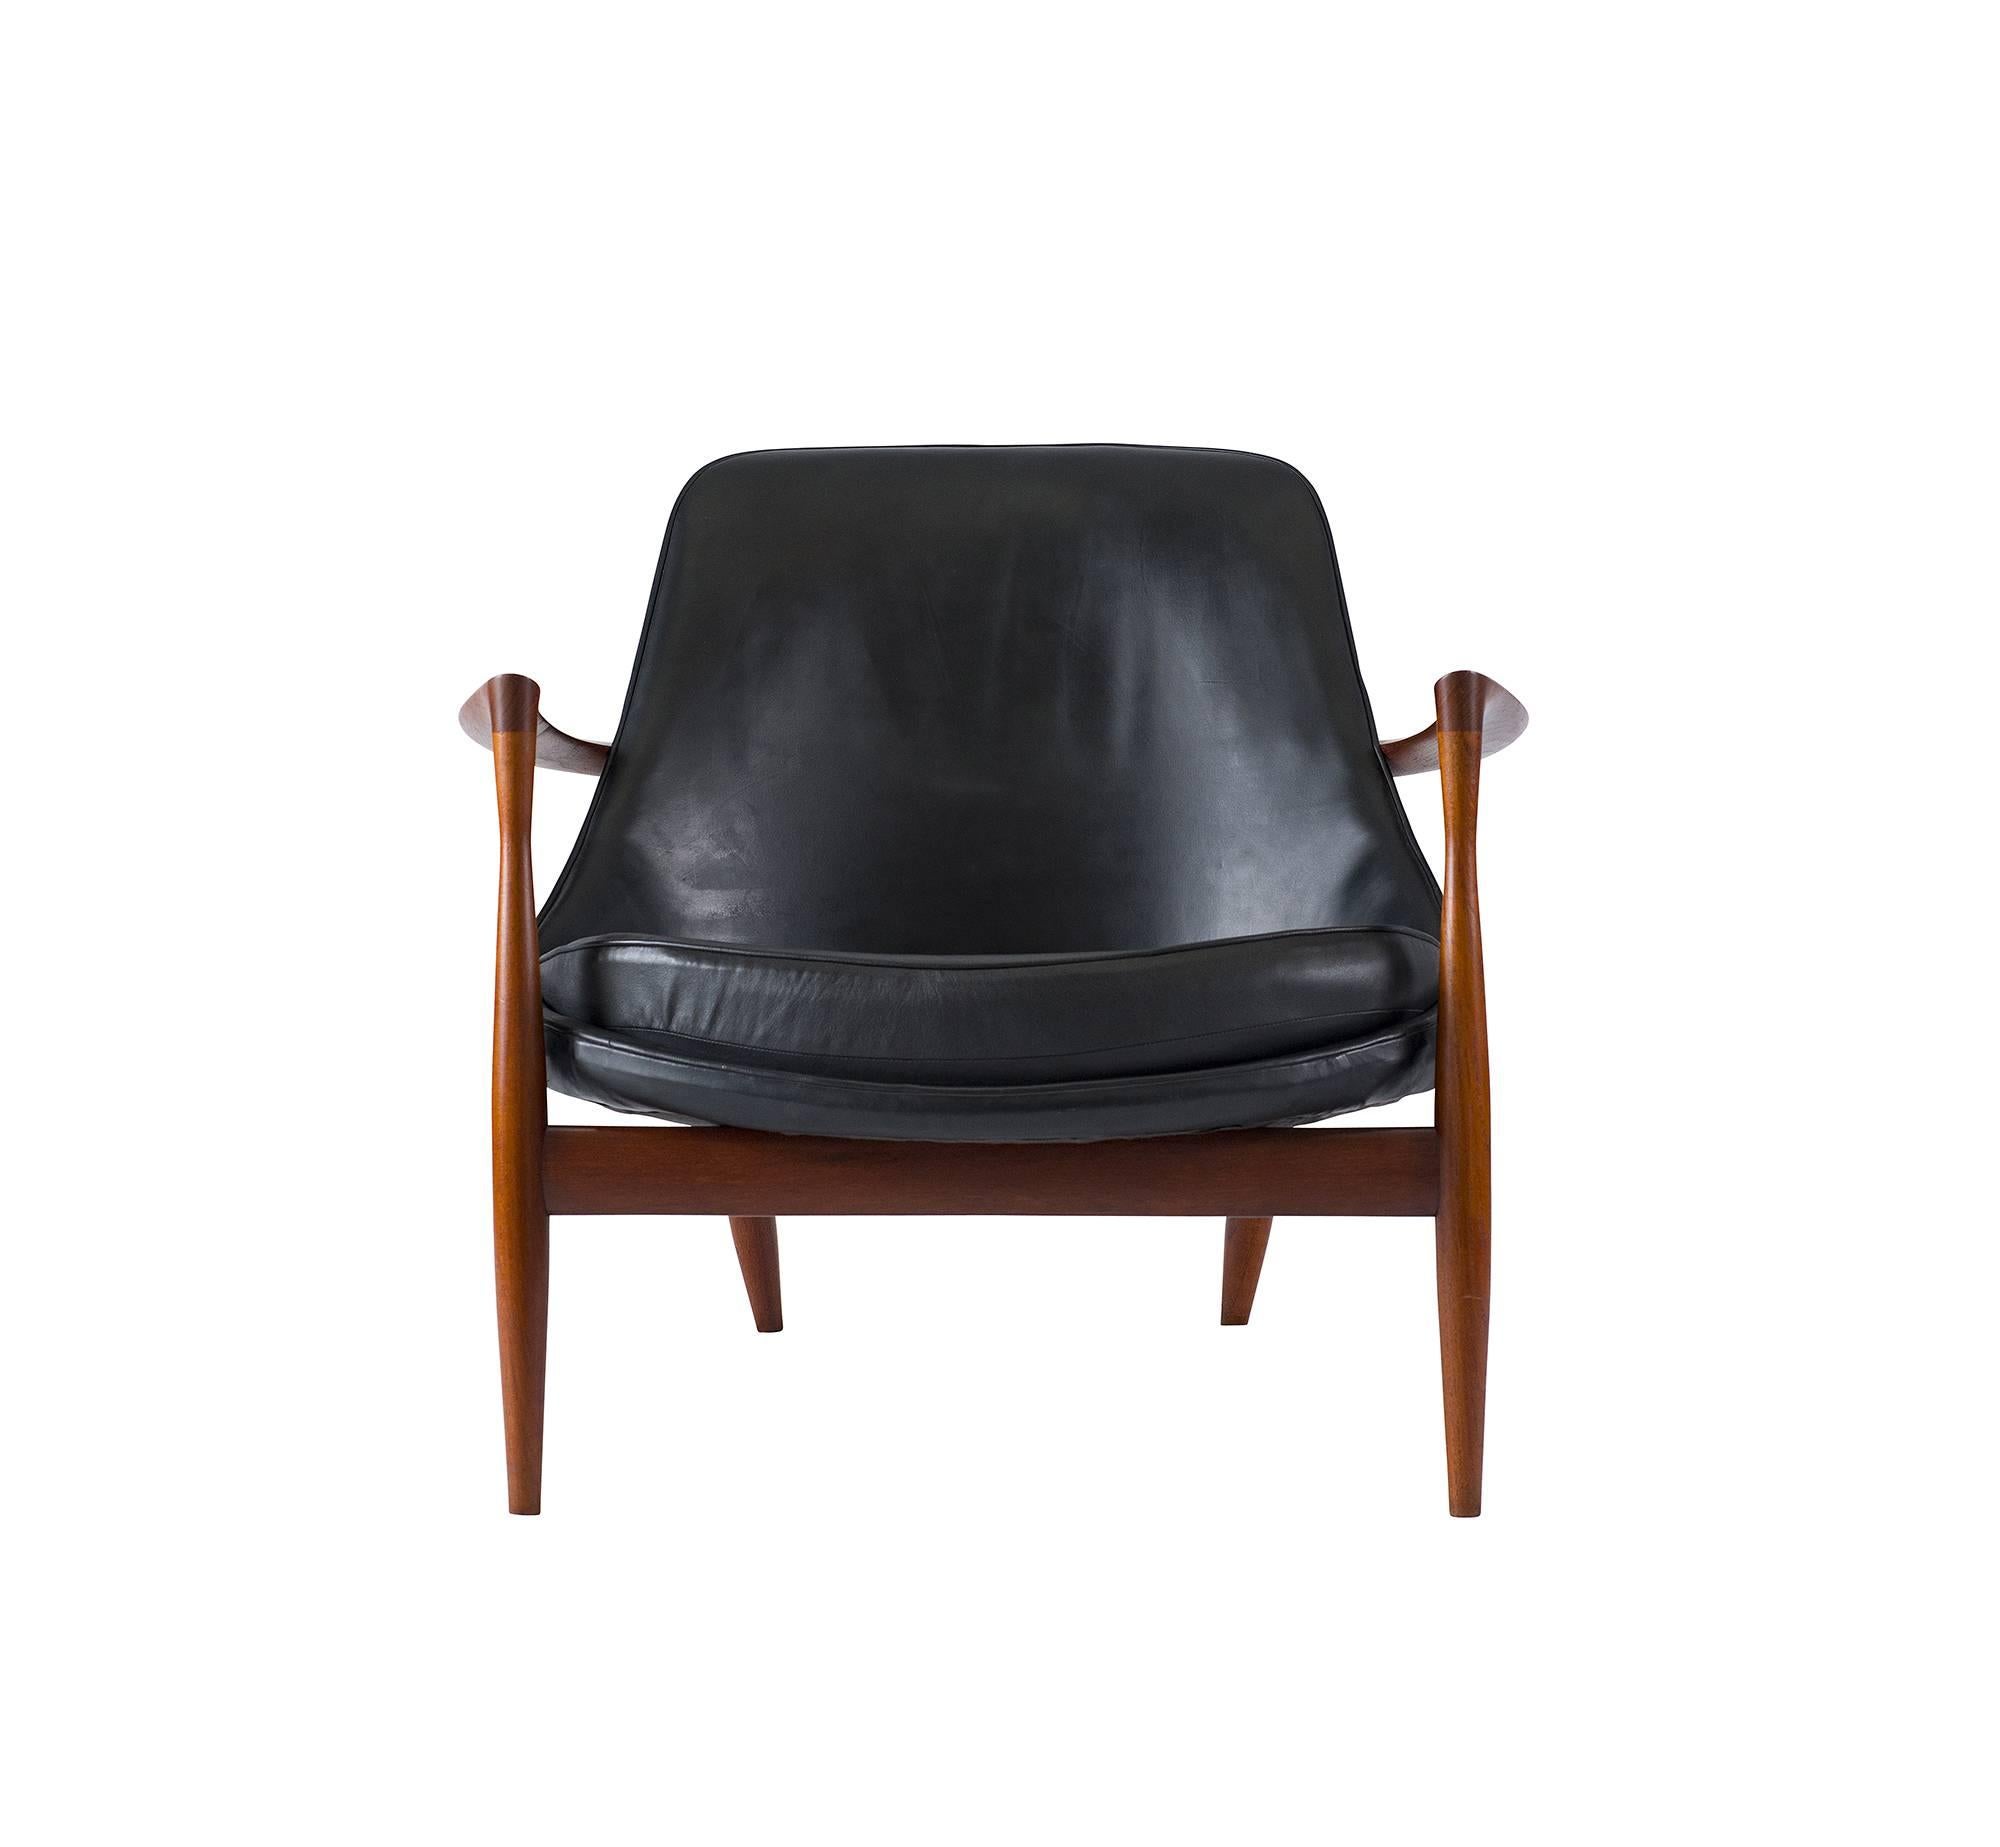 Ib Kofod-Larsen "Elizabeth" chair designed in 1956 and produced by Christensen & Larsen.